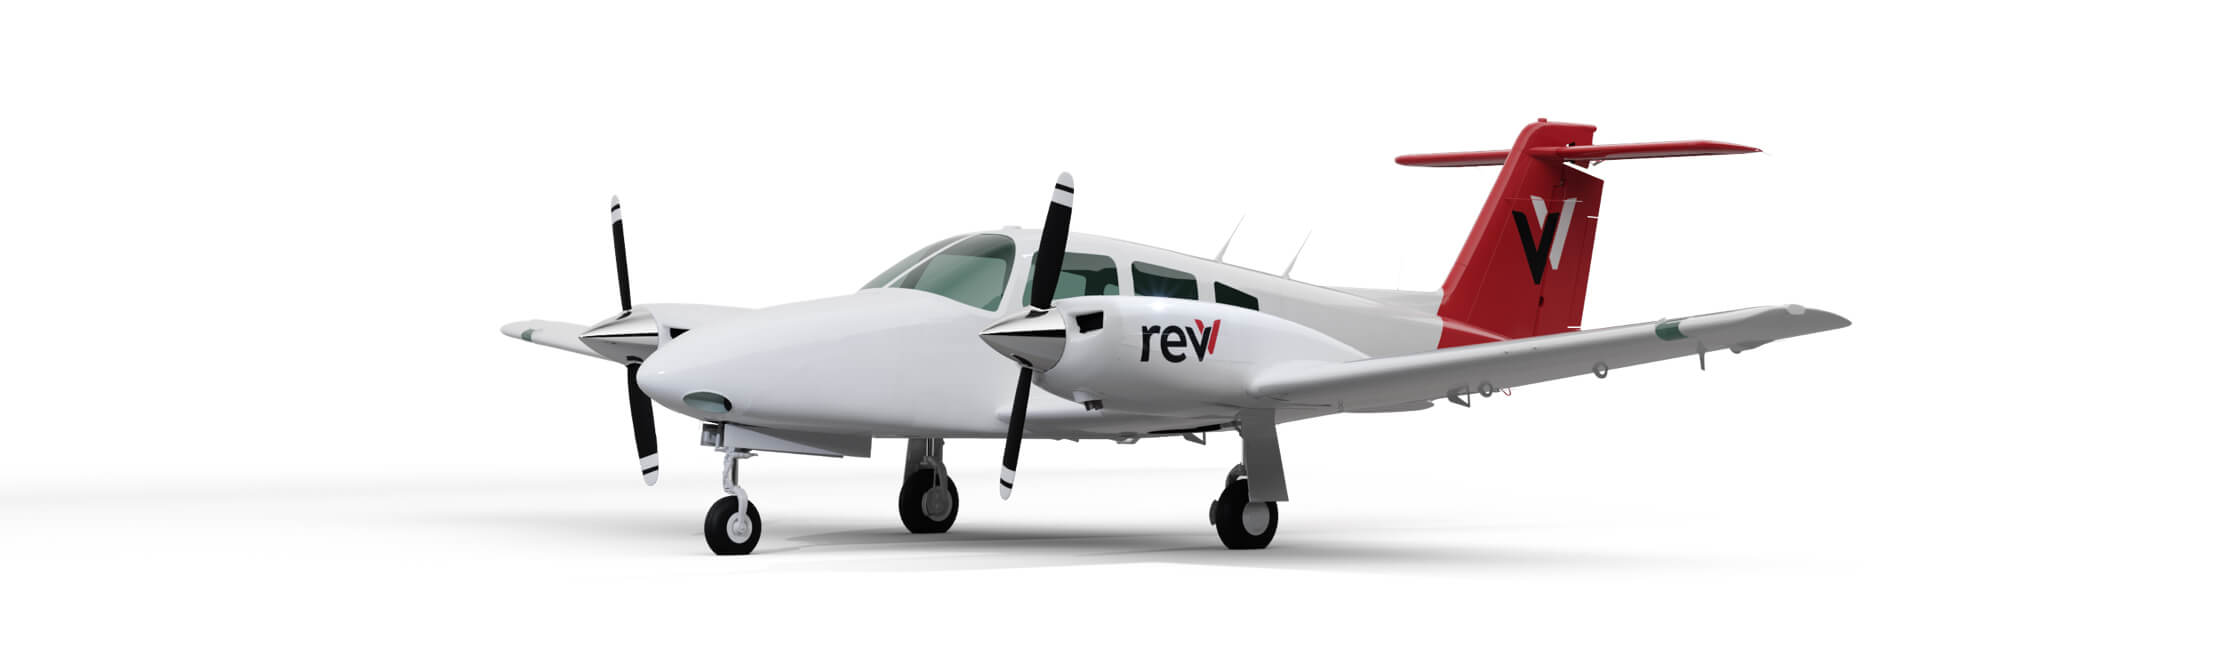 Piper Seminole airplane branded with revv logo